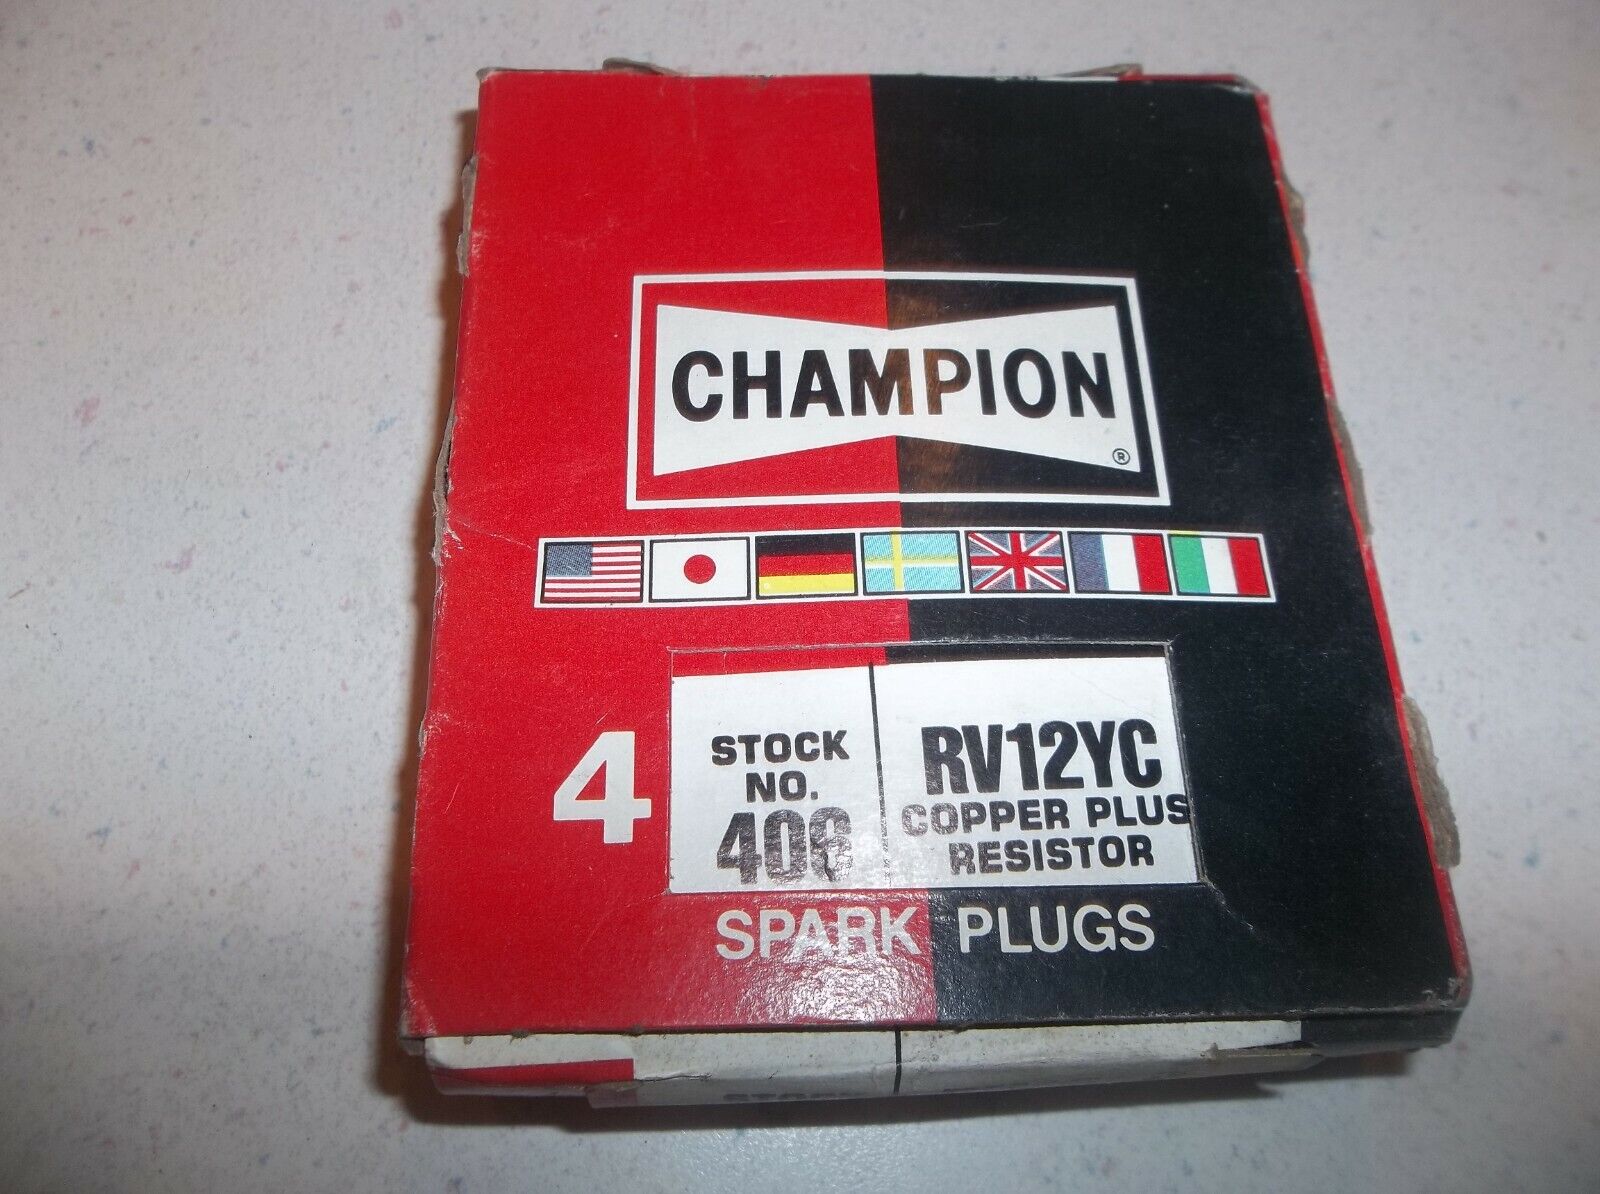 NOS Champion RV12YC Spark Plugs box of 4